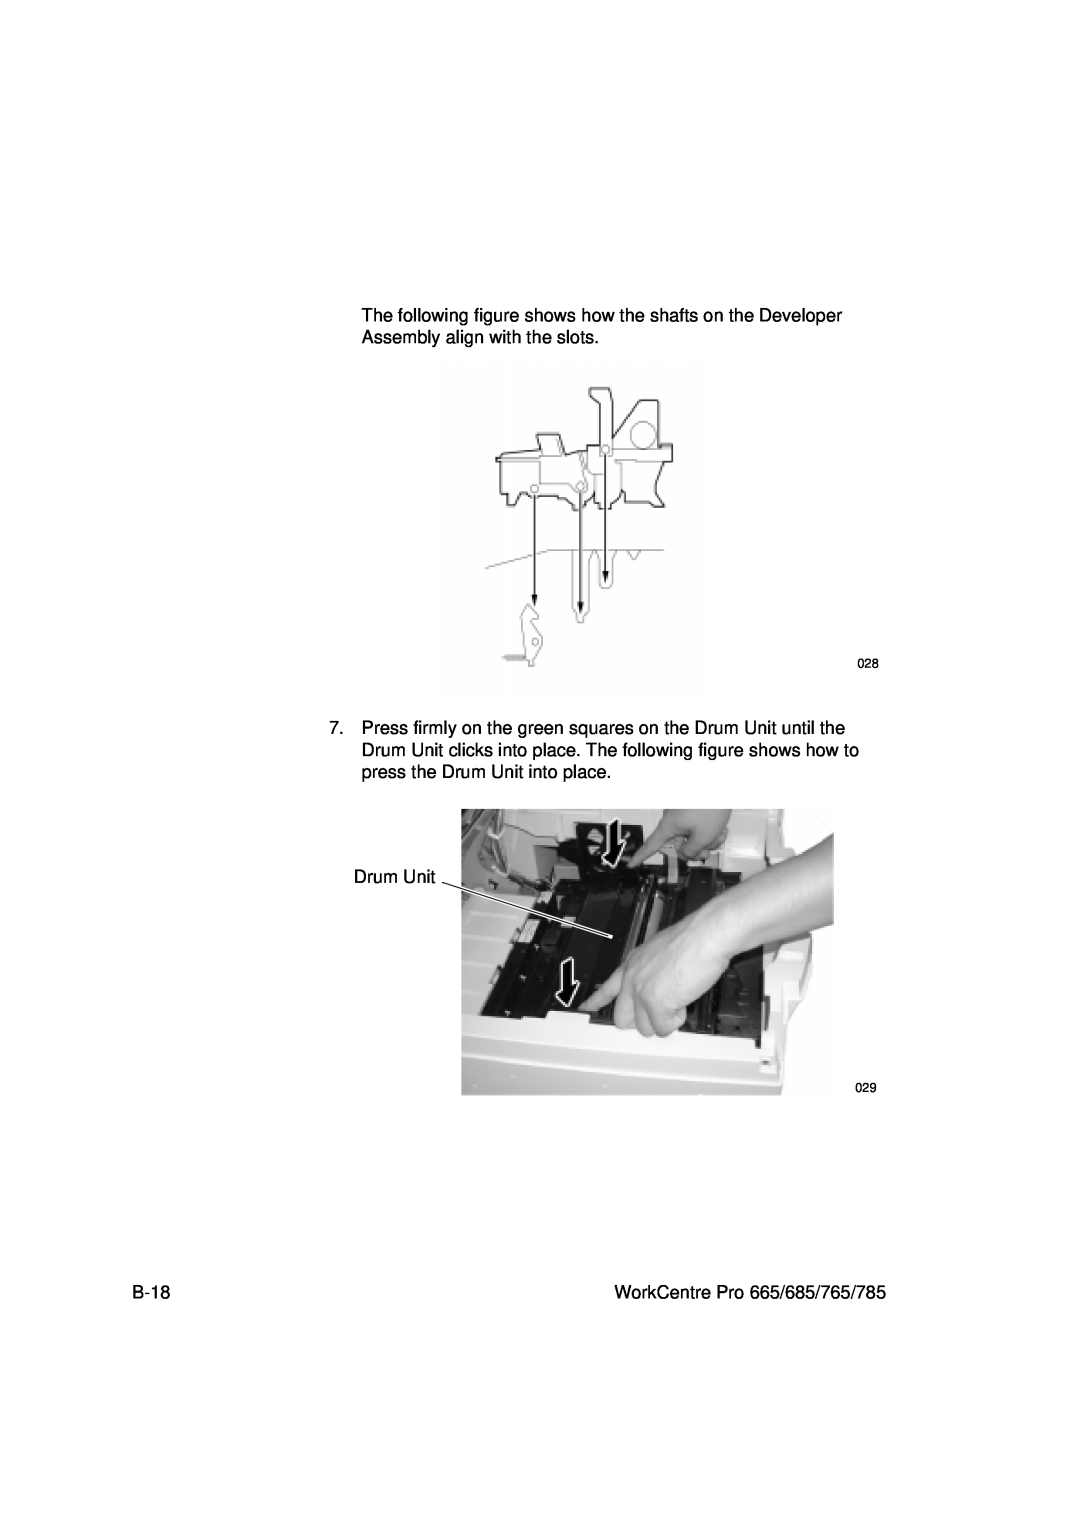 Xerox manual Drum Unit, B-18, WorkCentre Pro 665/685/765/785 